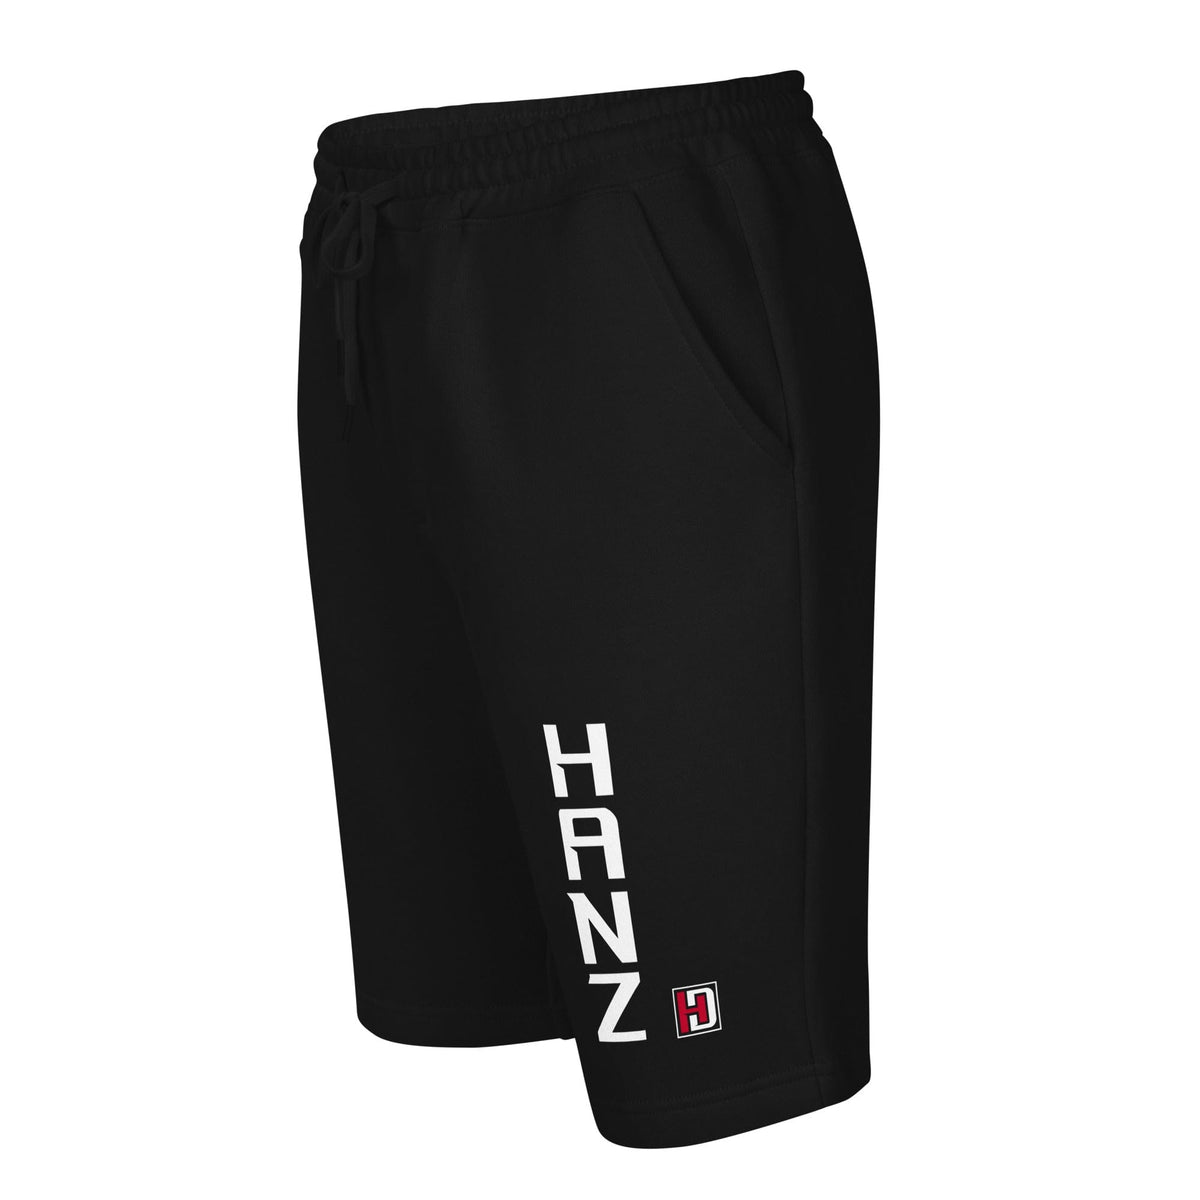 Hanz fleece shorts Black active wear